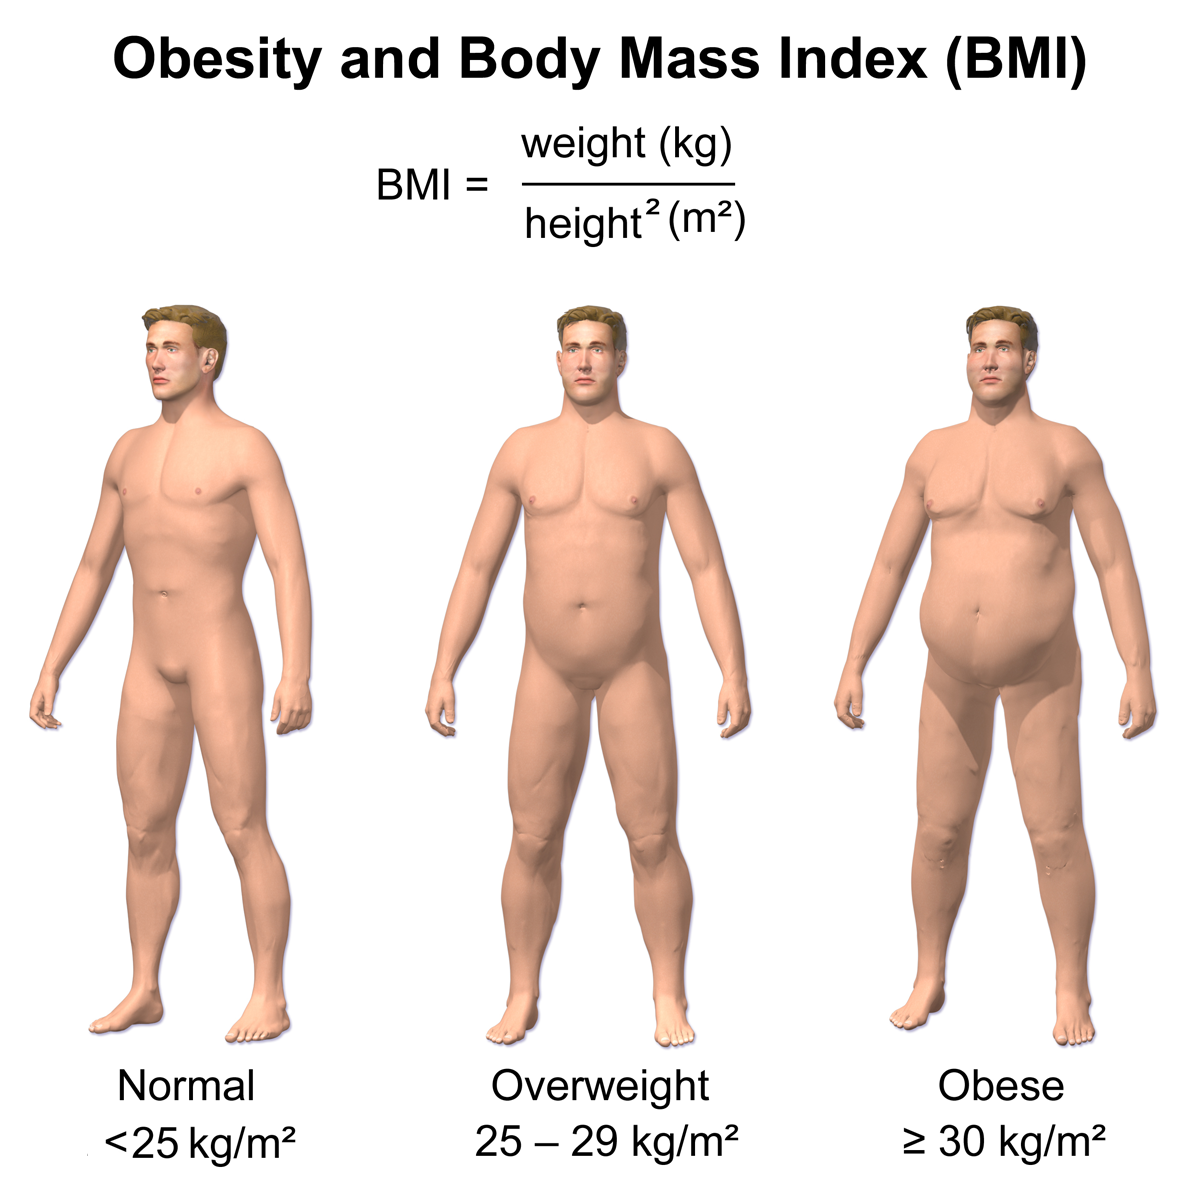 https://sciencebasedmedicine.org/wp-content/uploads/2021/04/Obesity__BMI.png